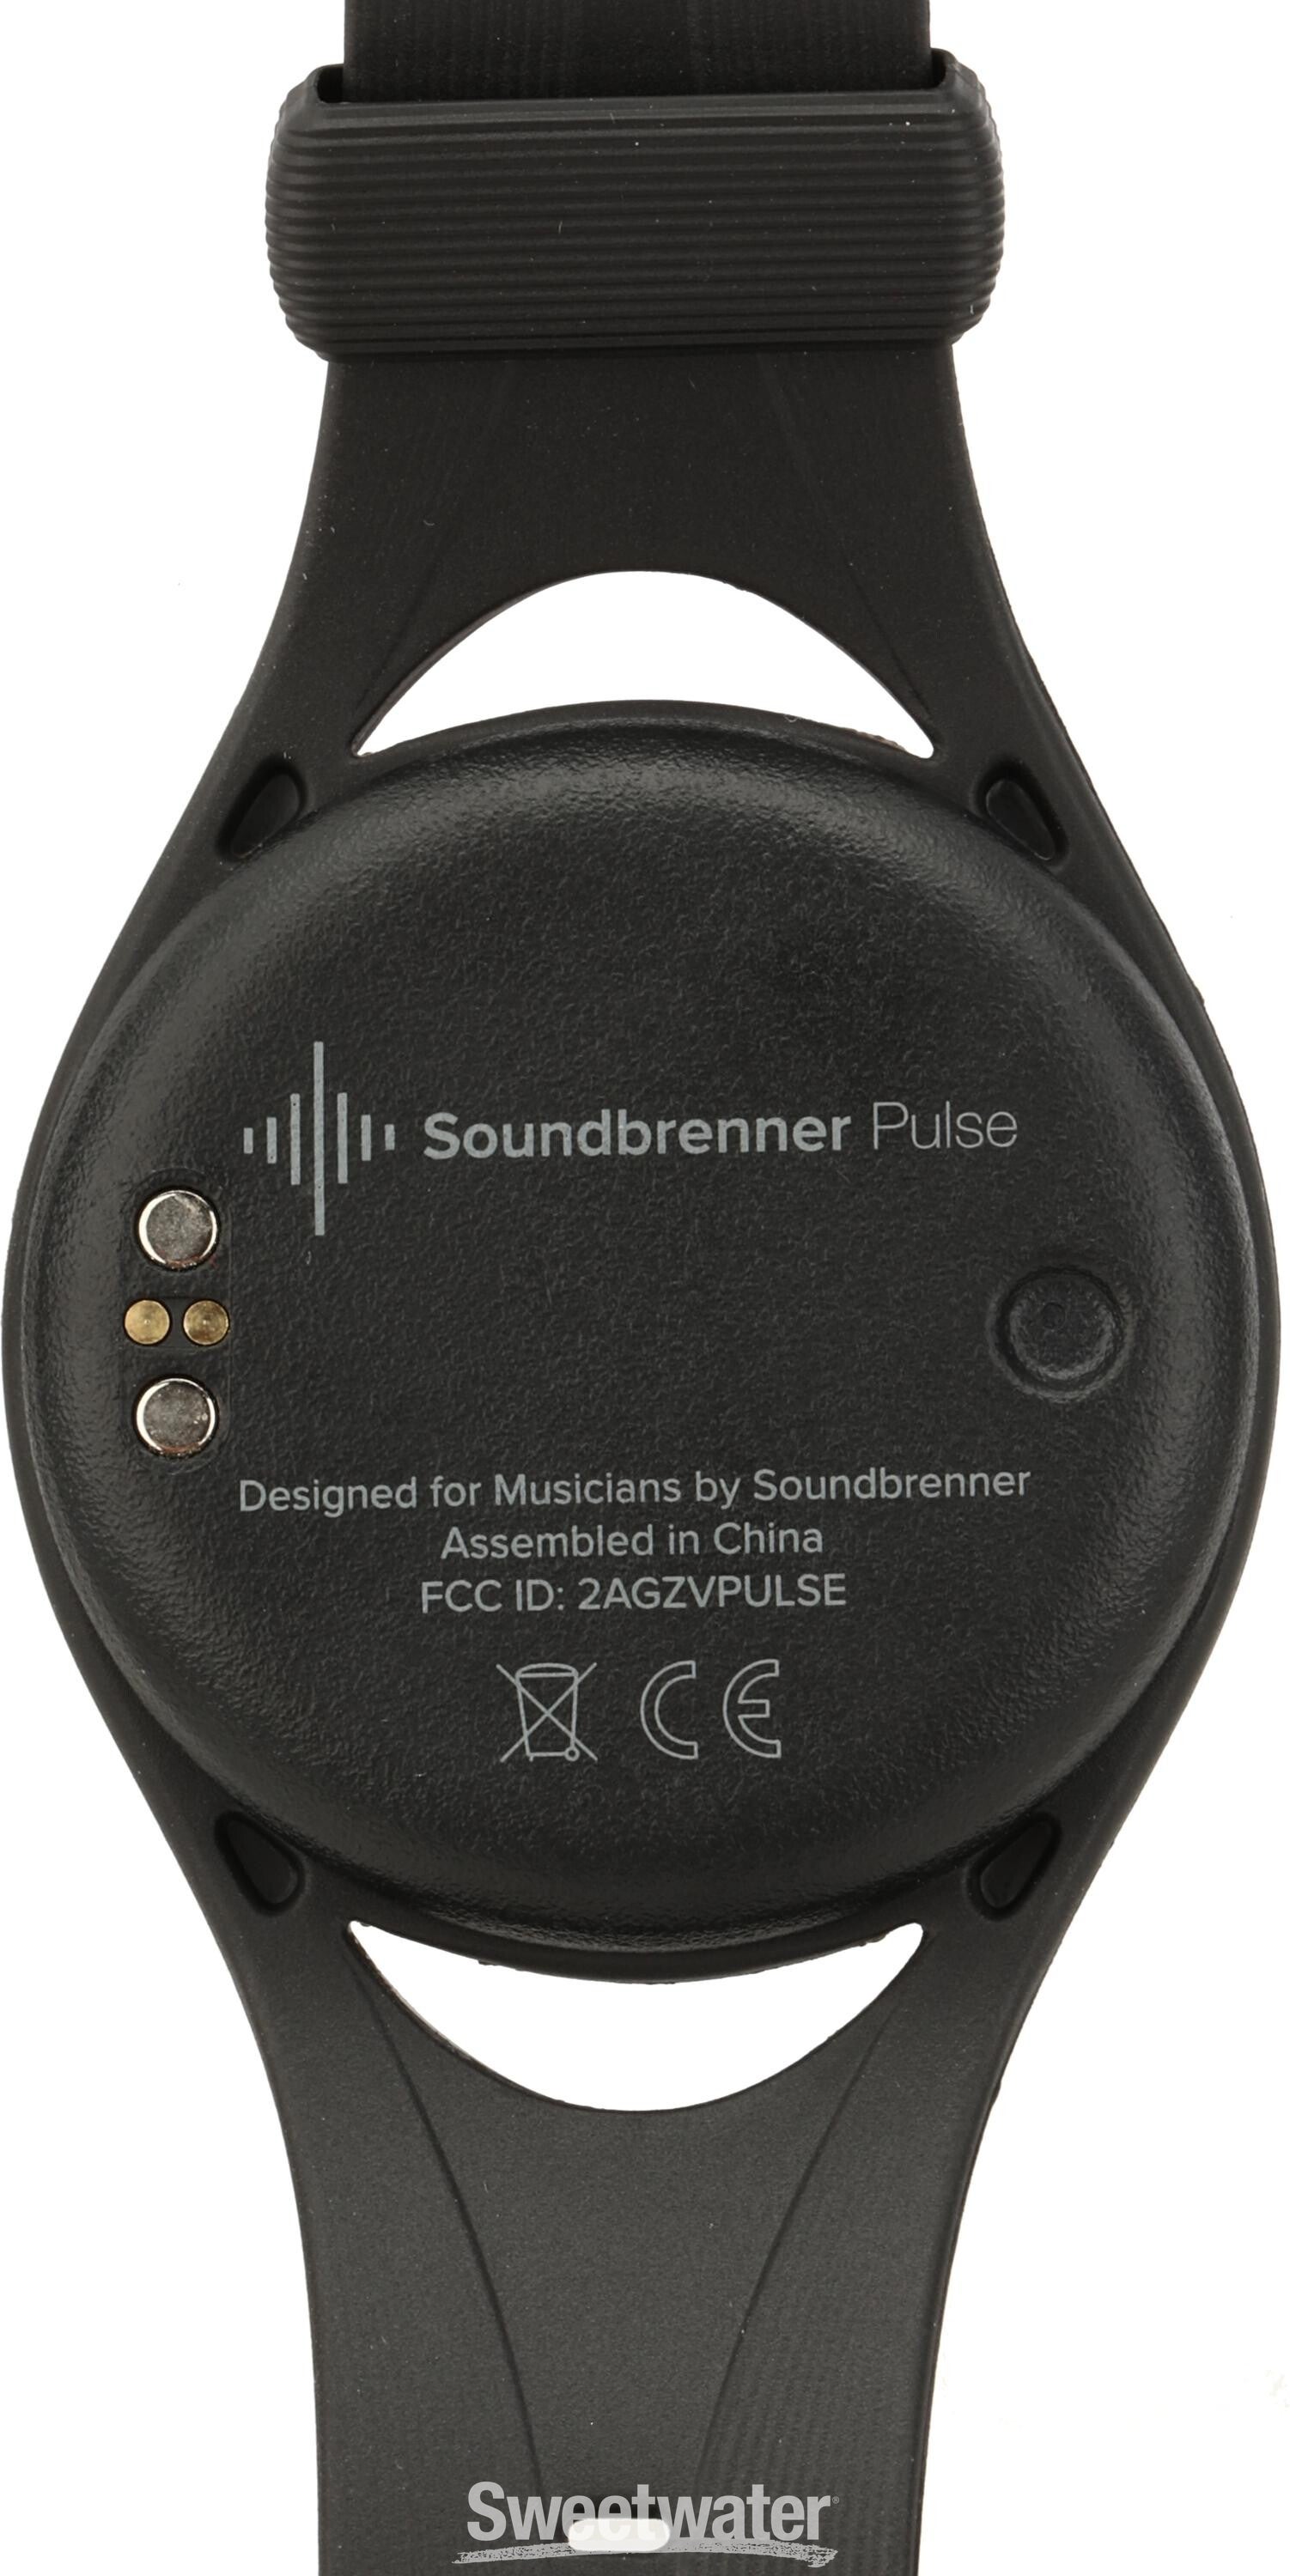 Soundbrenner Pulse Vibrating Metronome